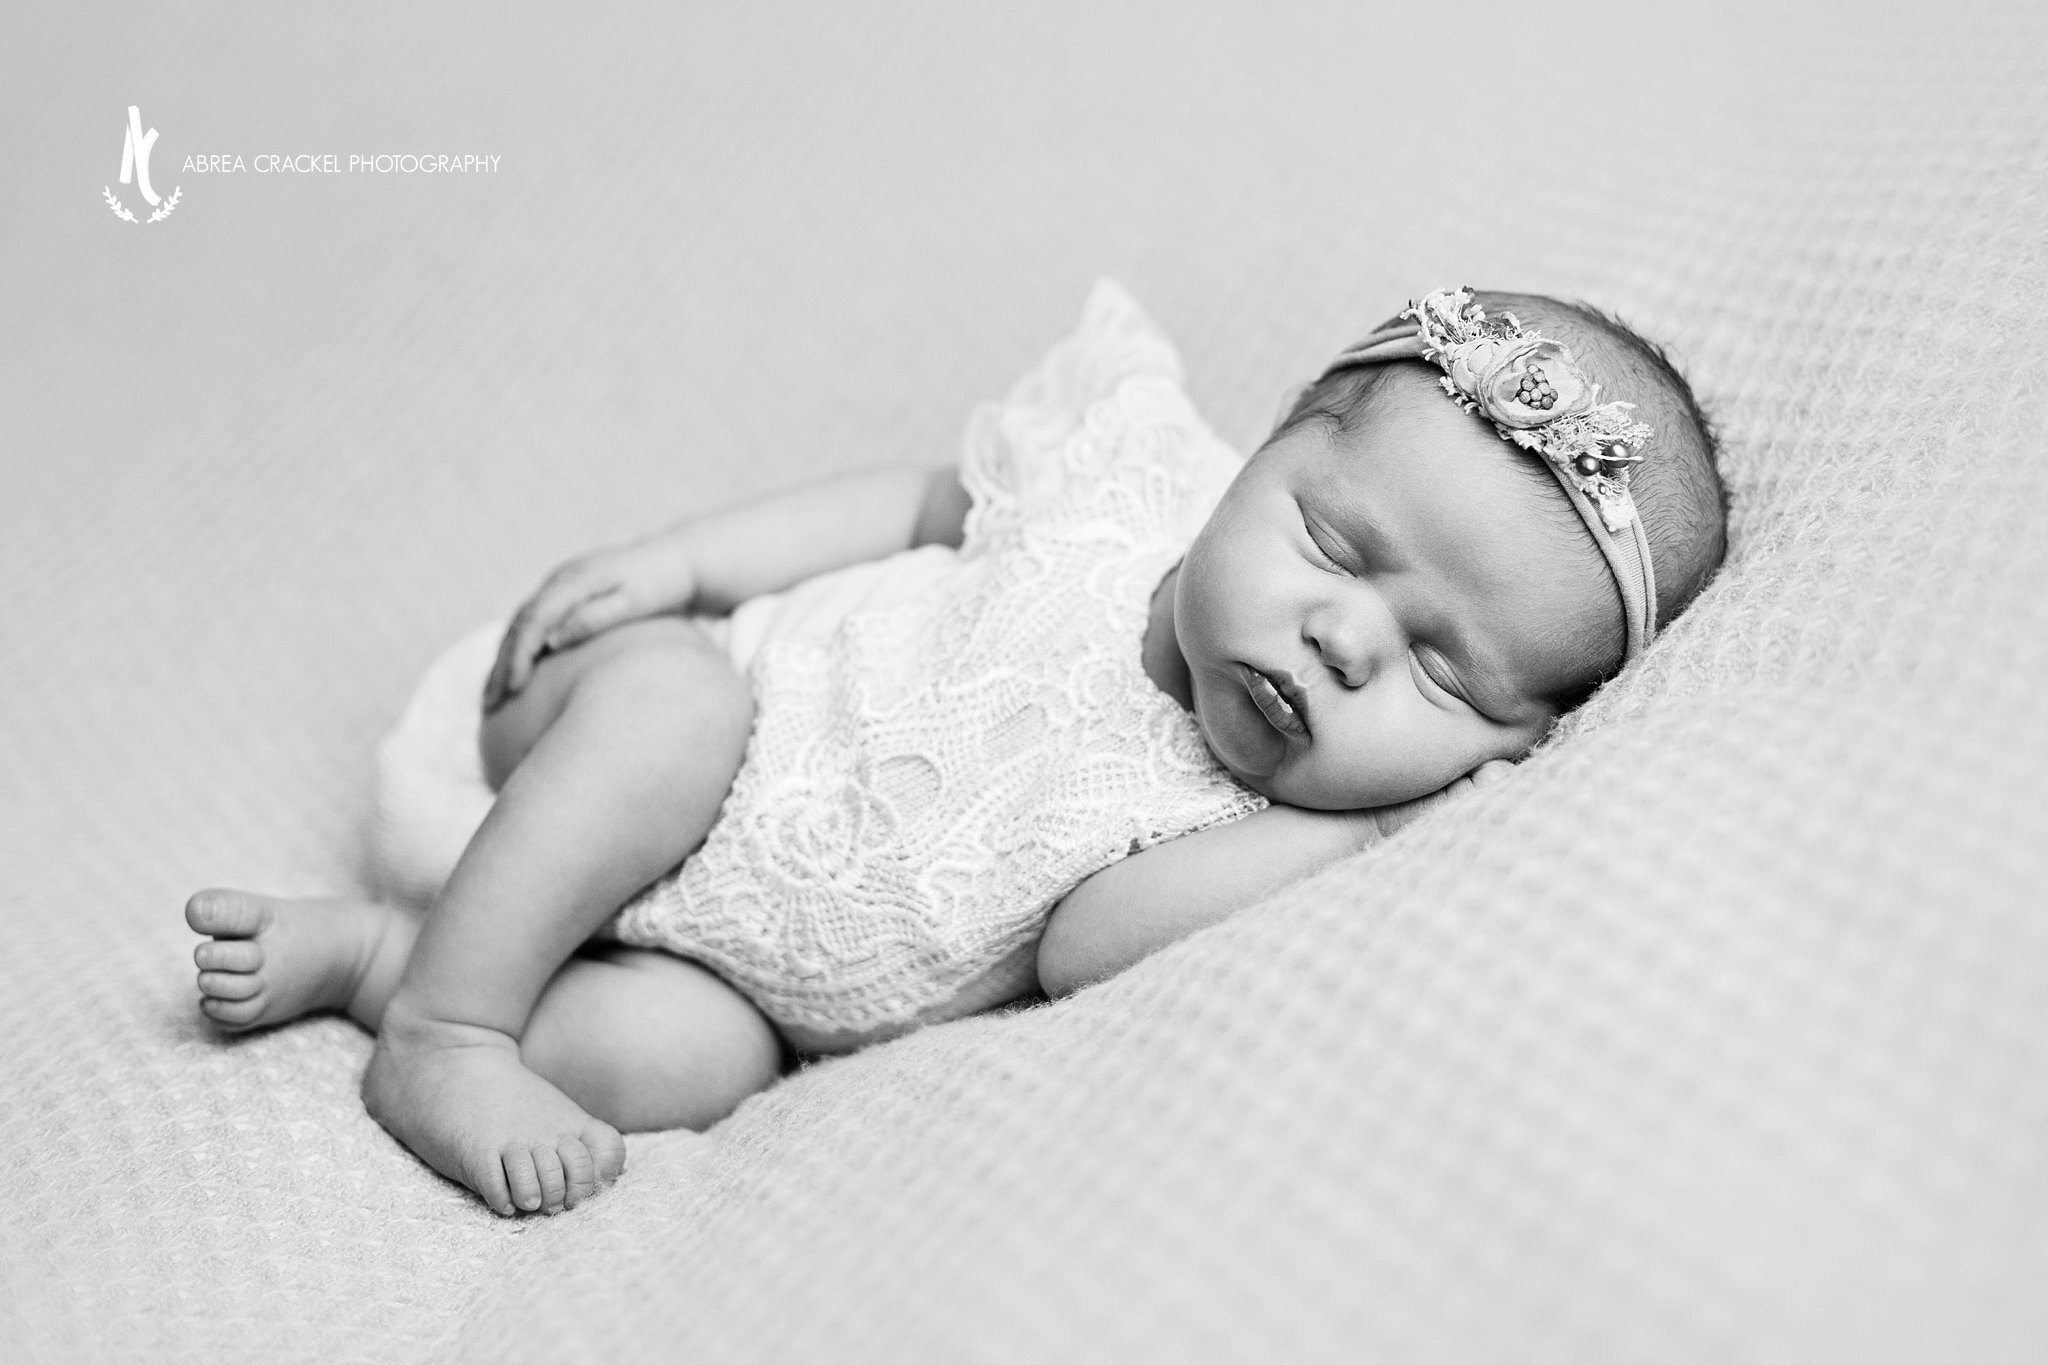 Abrea_Crackel_Family_Newborn_Photographer-b_40.jpg